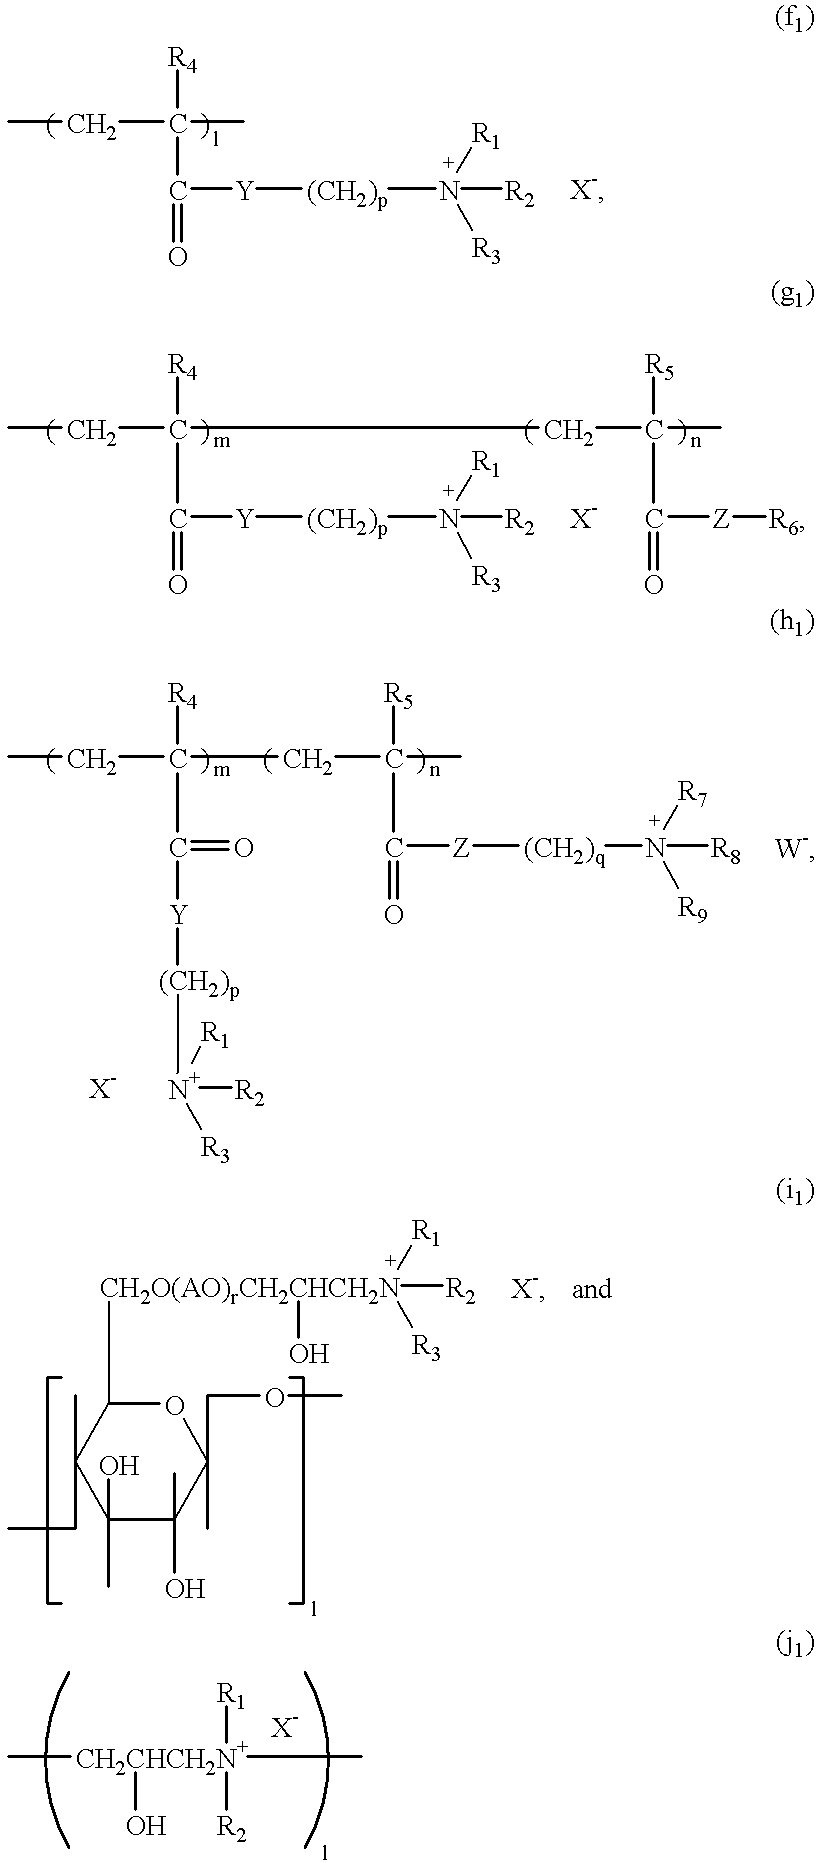 Wastepaper deinking method using amine or acid salt of amine in the flotation stage